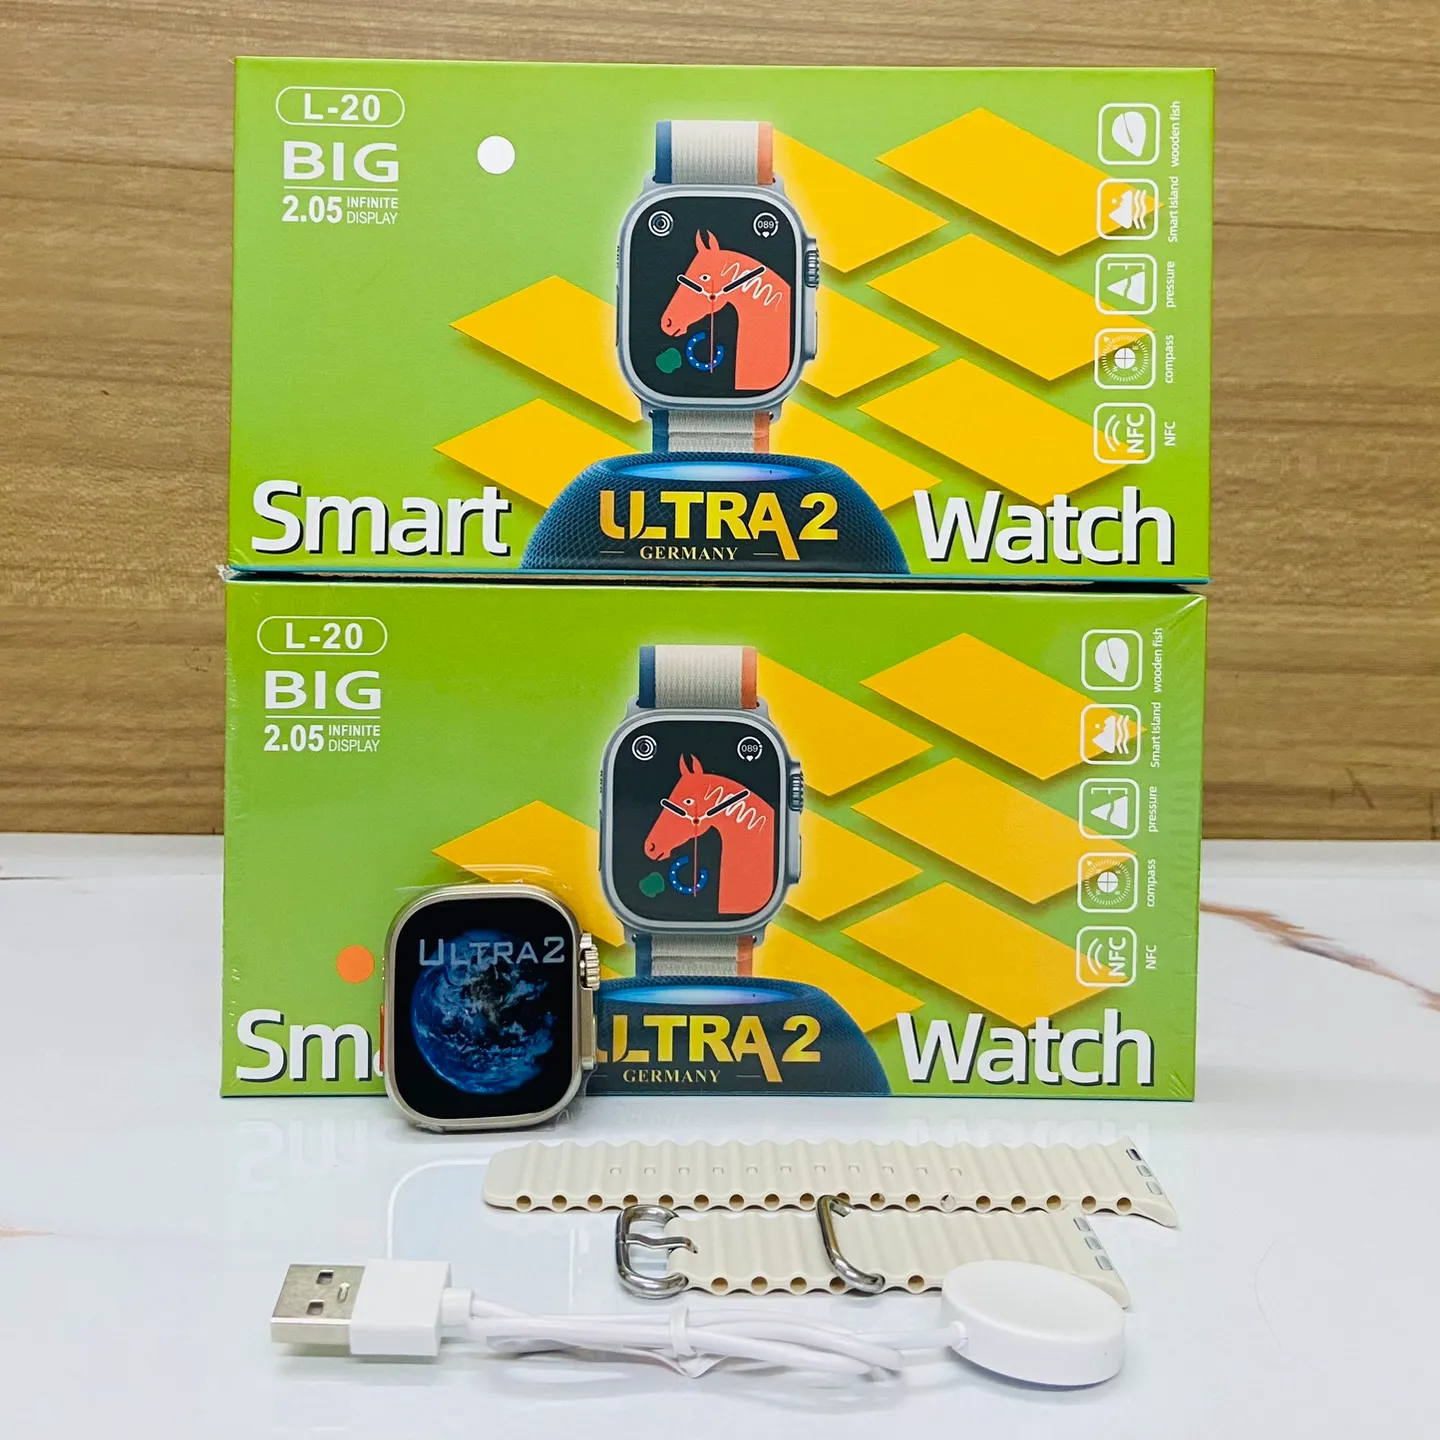 Buy L20 Ultra Smart watch at best price in Pakistan | Rhizmall.pk